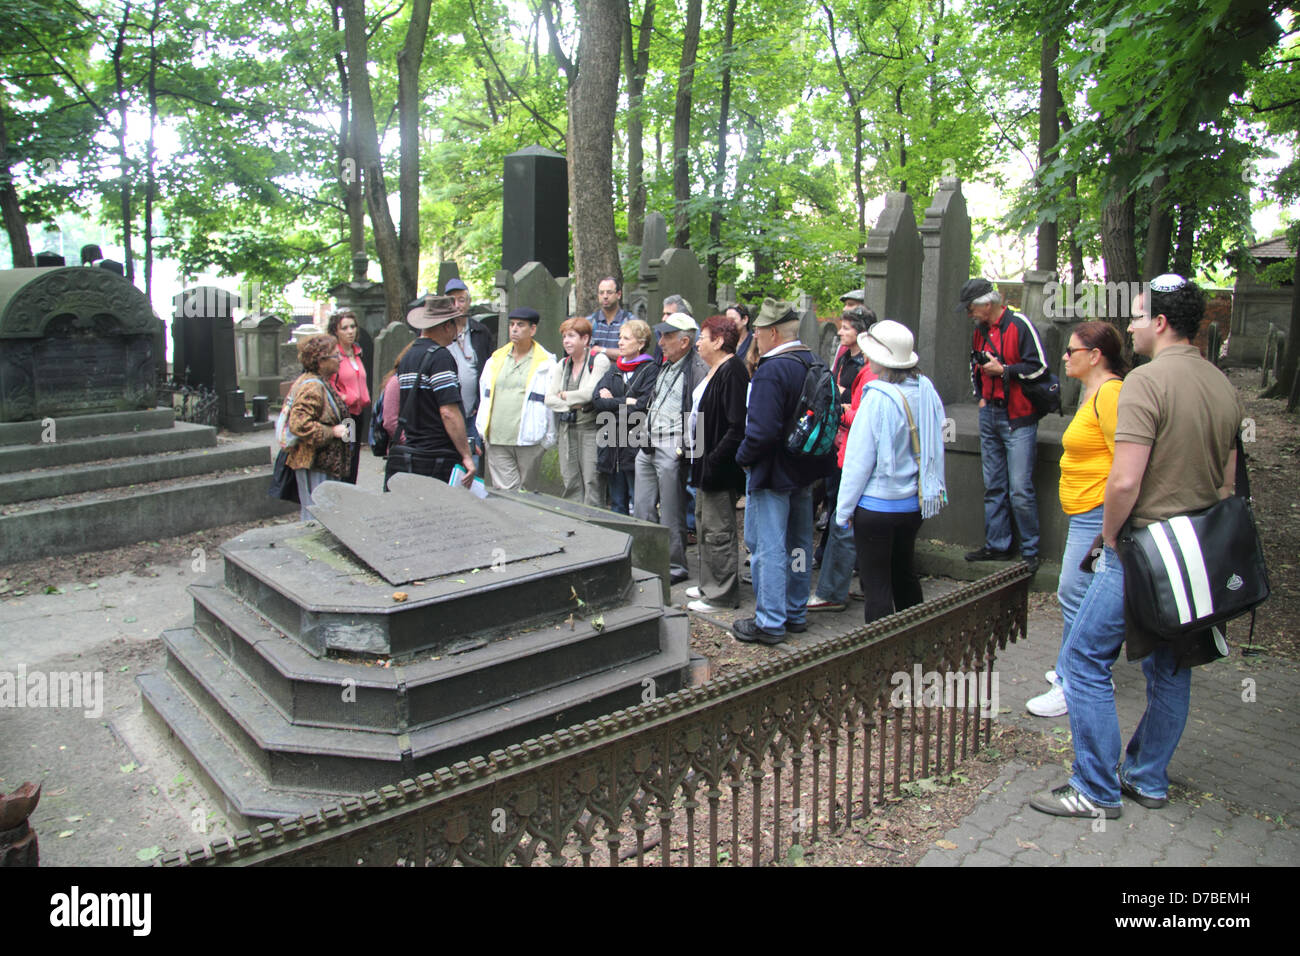 Israelis visiting the Okopowa Street Jewish Cemetery in Warsaw, Poland Stock Photo